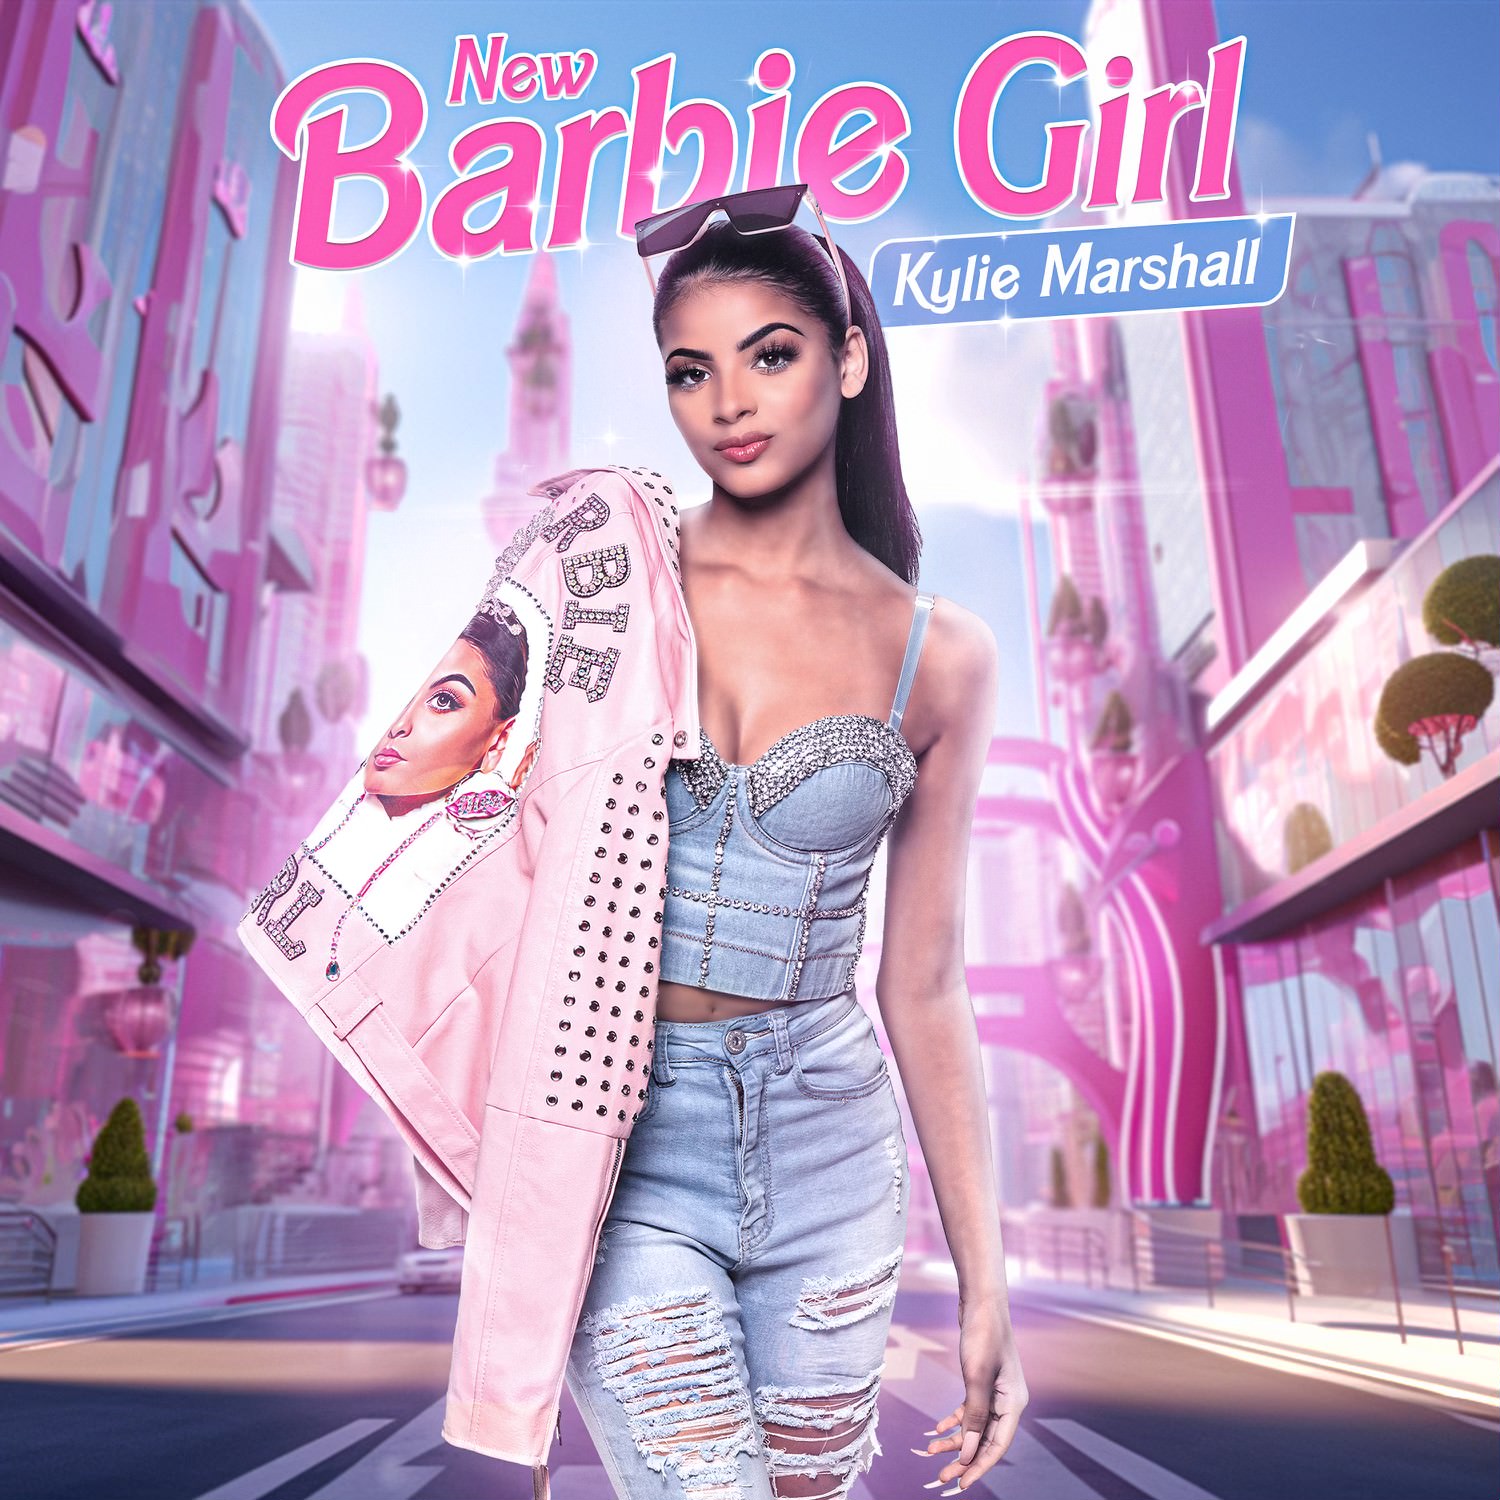 Teen Sensation Kylie Marshall Releases New "Barbie Girl" Music Video Worldwide 